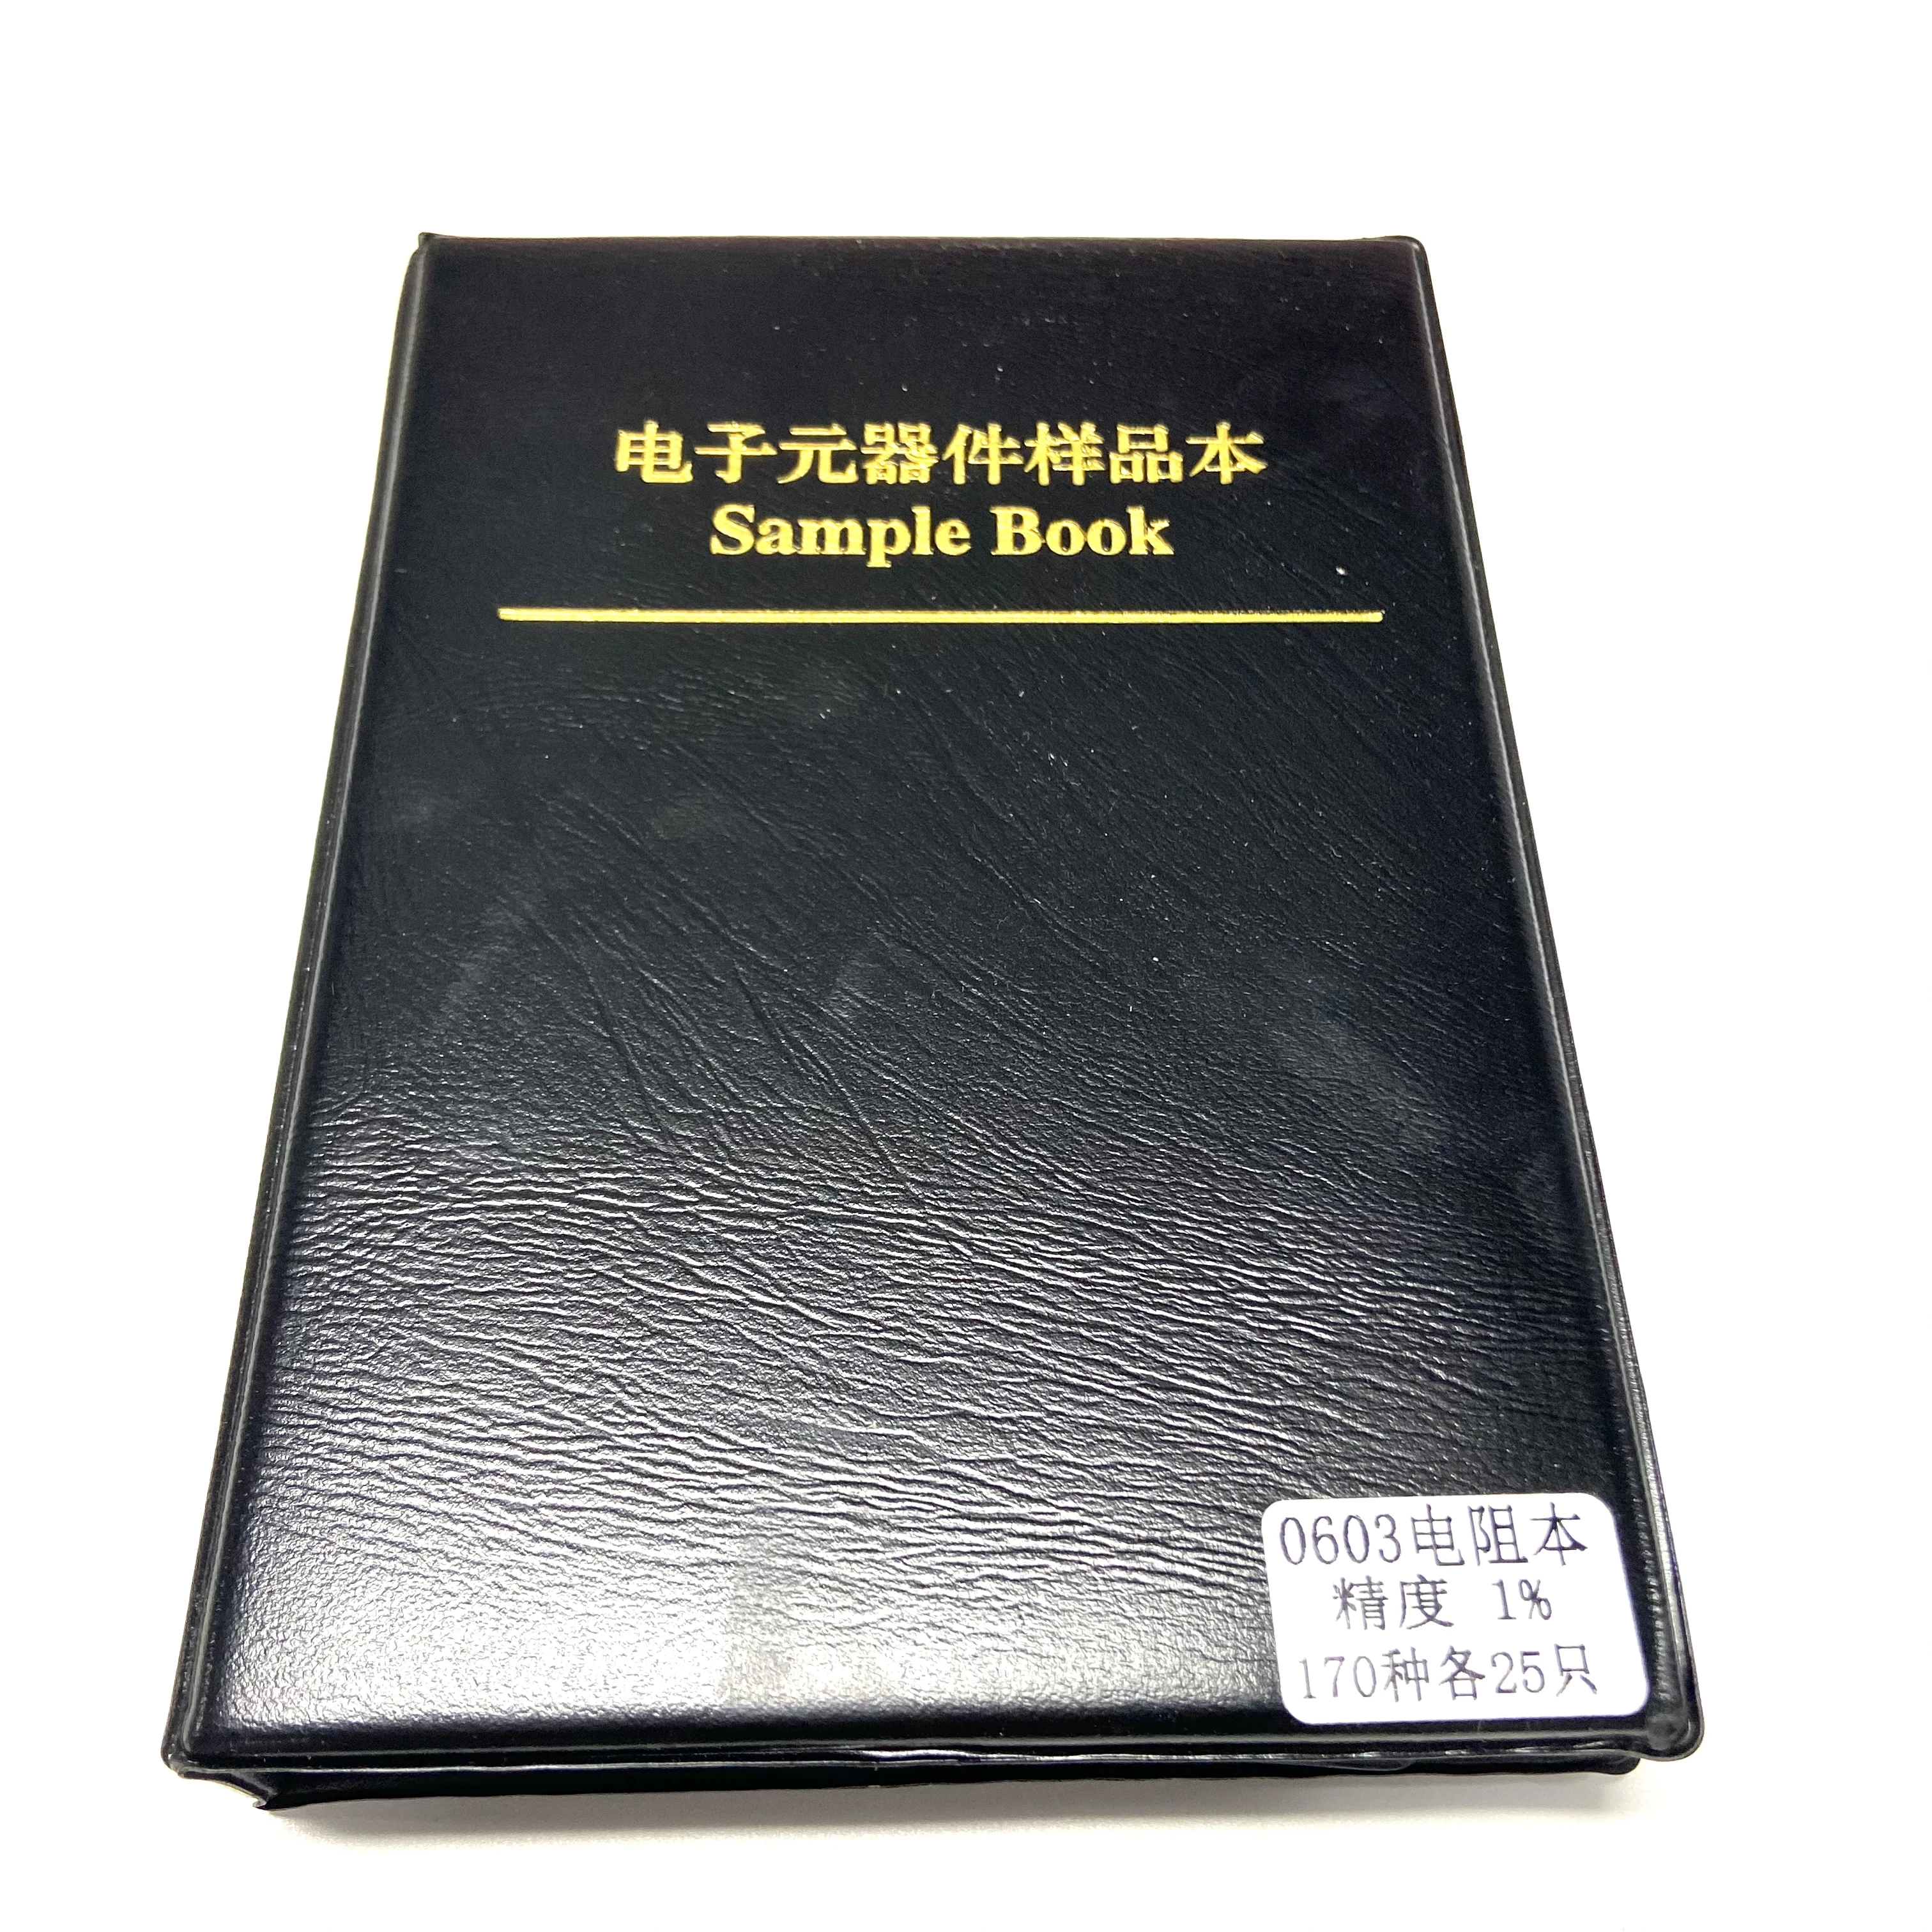 0603 Chip Resistor Book 0603 1% 170ValueX25pcs 0603 Resistor Kit Components Sample Book